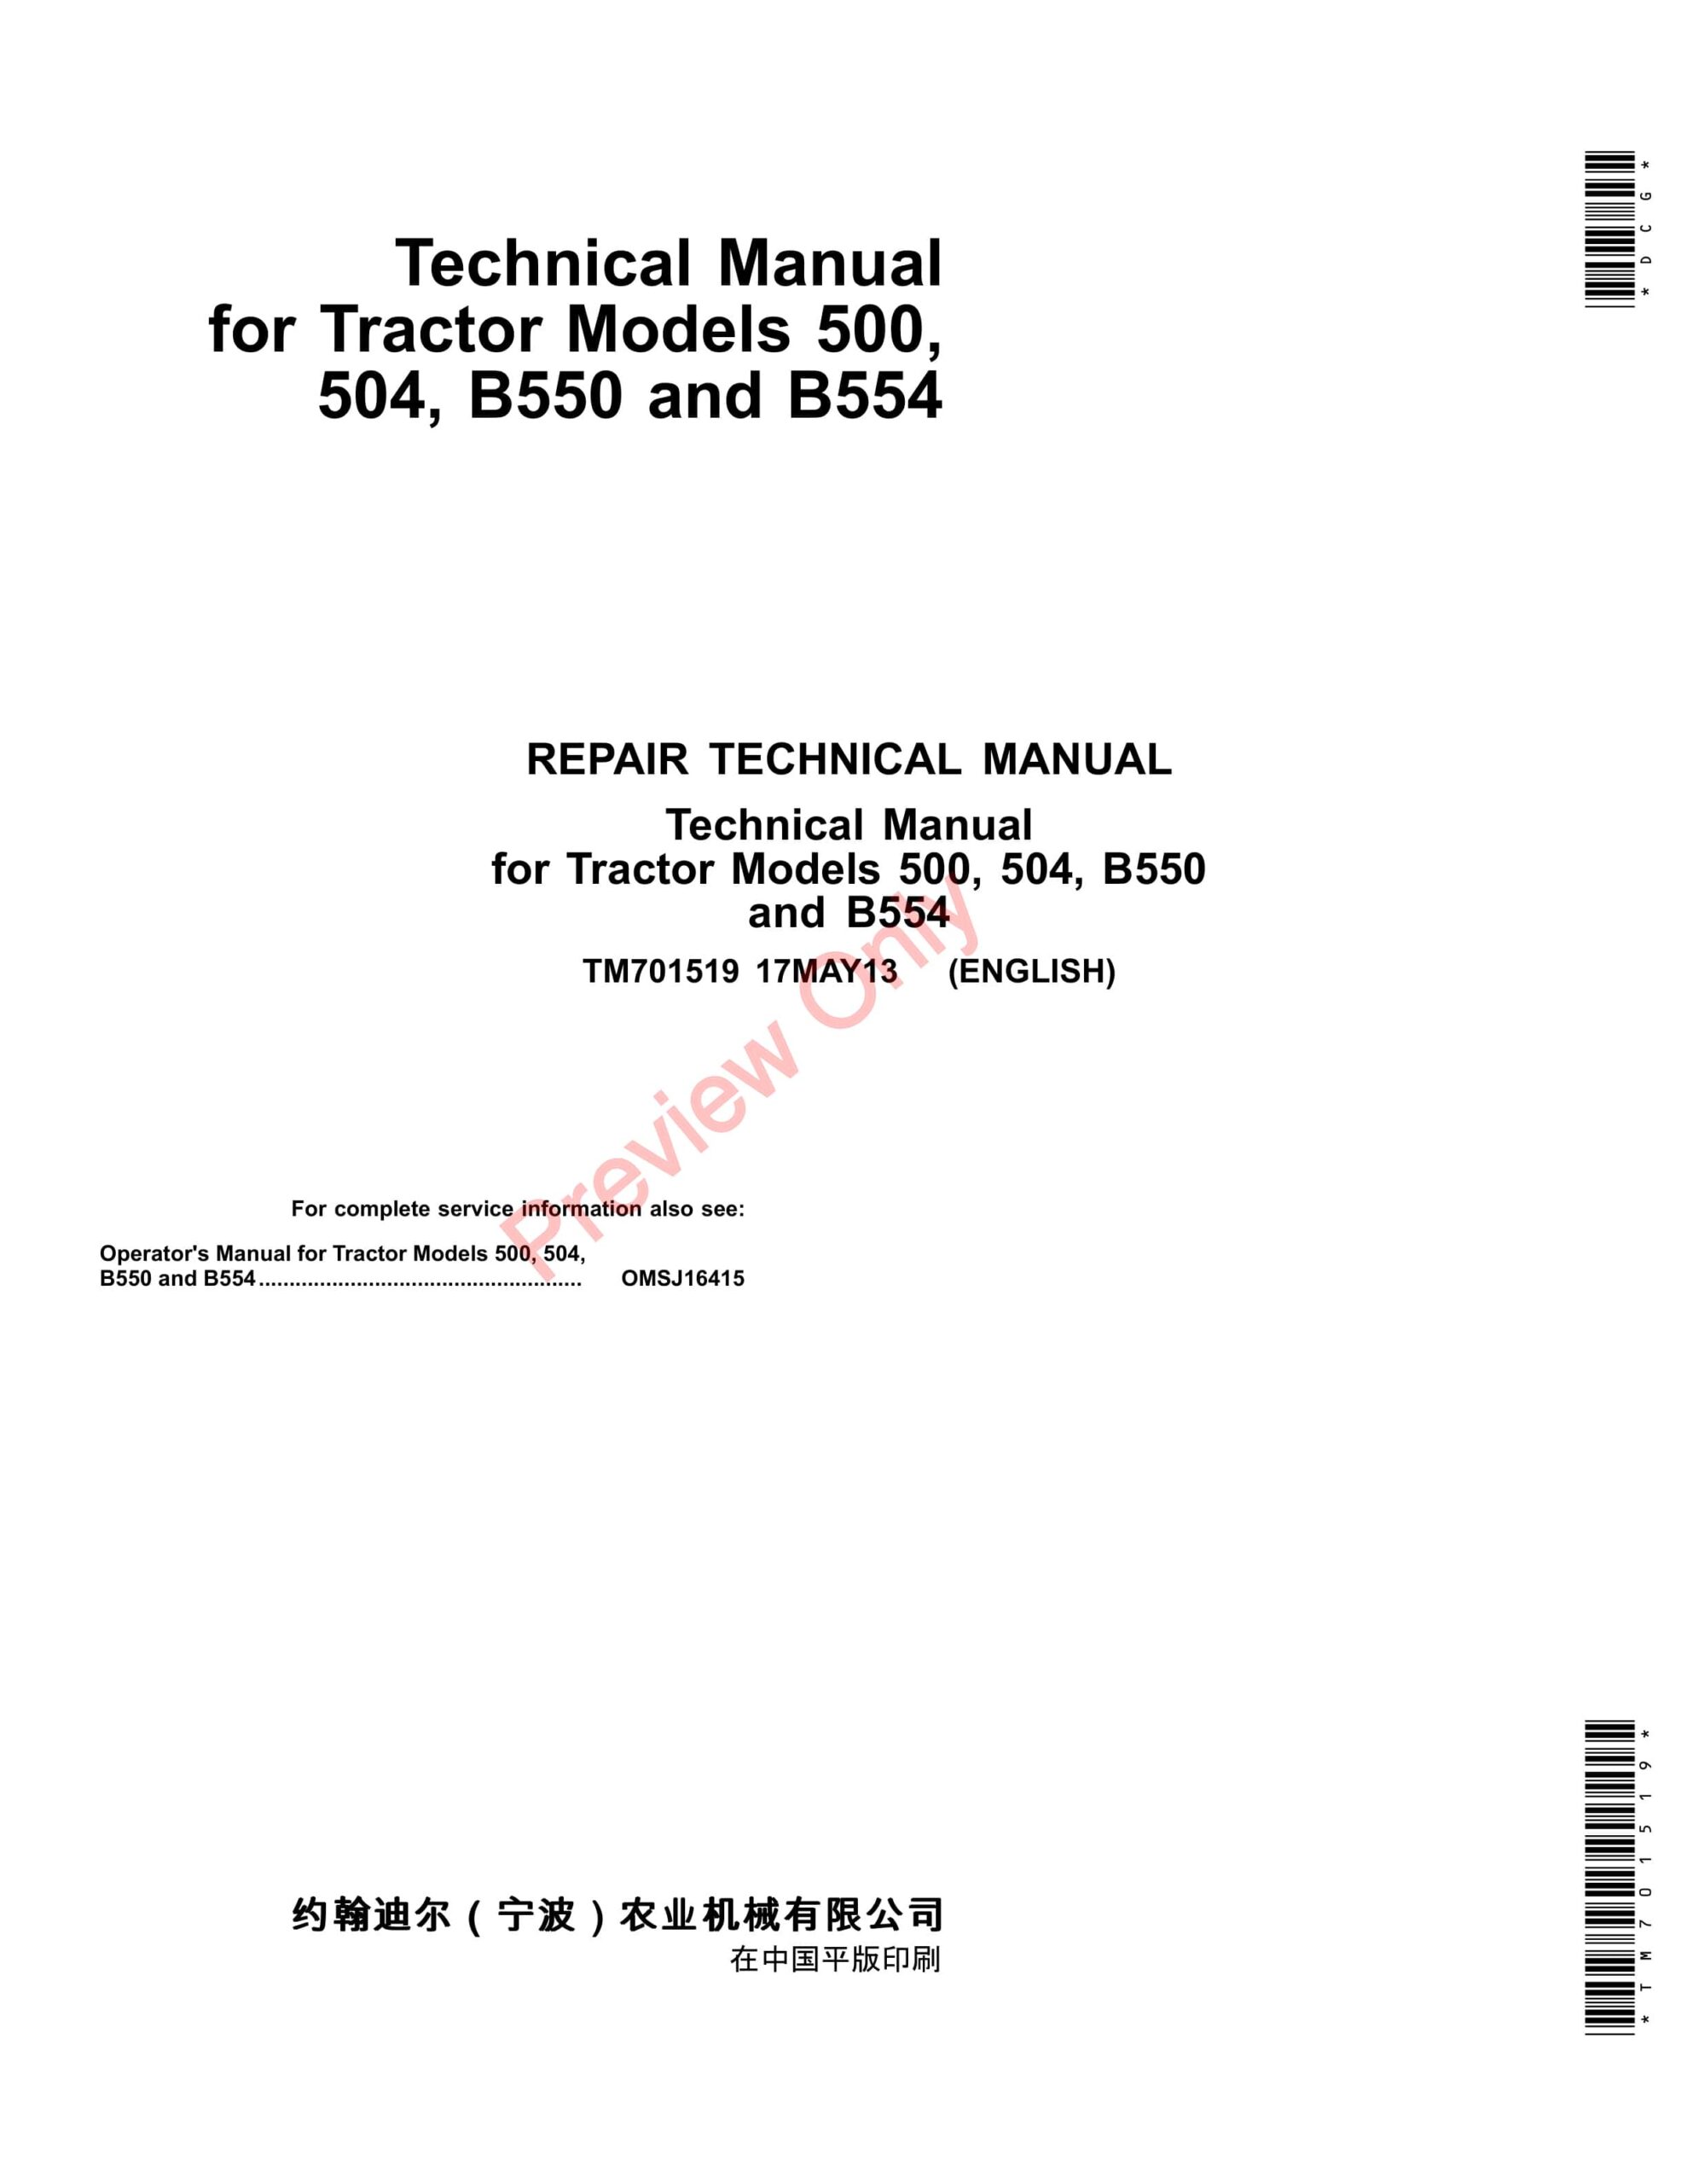 John Deere 500, 504, B550 and B554 Tractors – Technical Manual TM701519 01MAY13-1